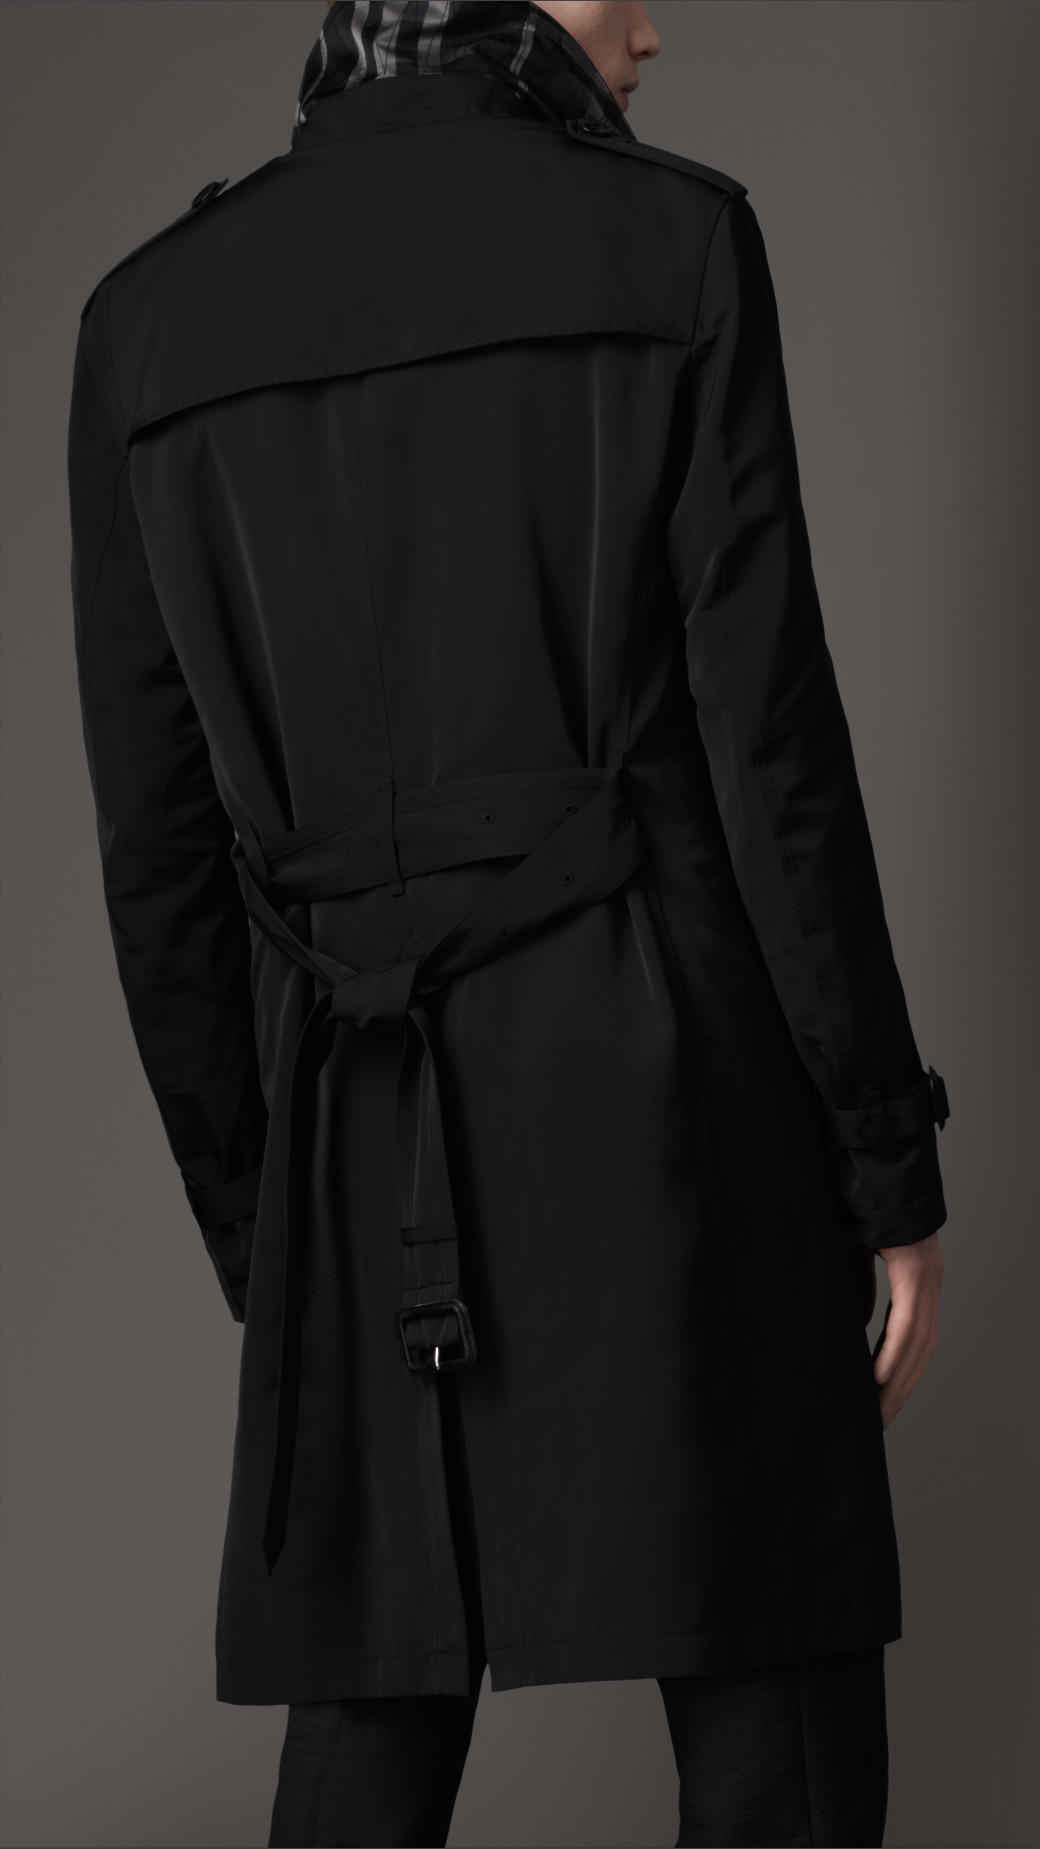 Burberry Long Detachable Warmer Trench Coat in Black for Men - Lyst